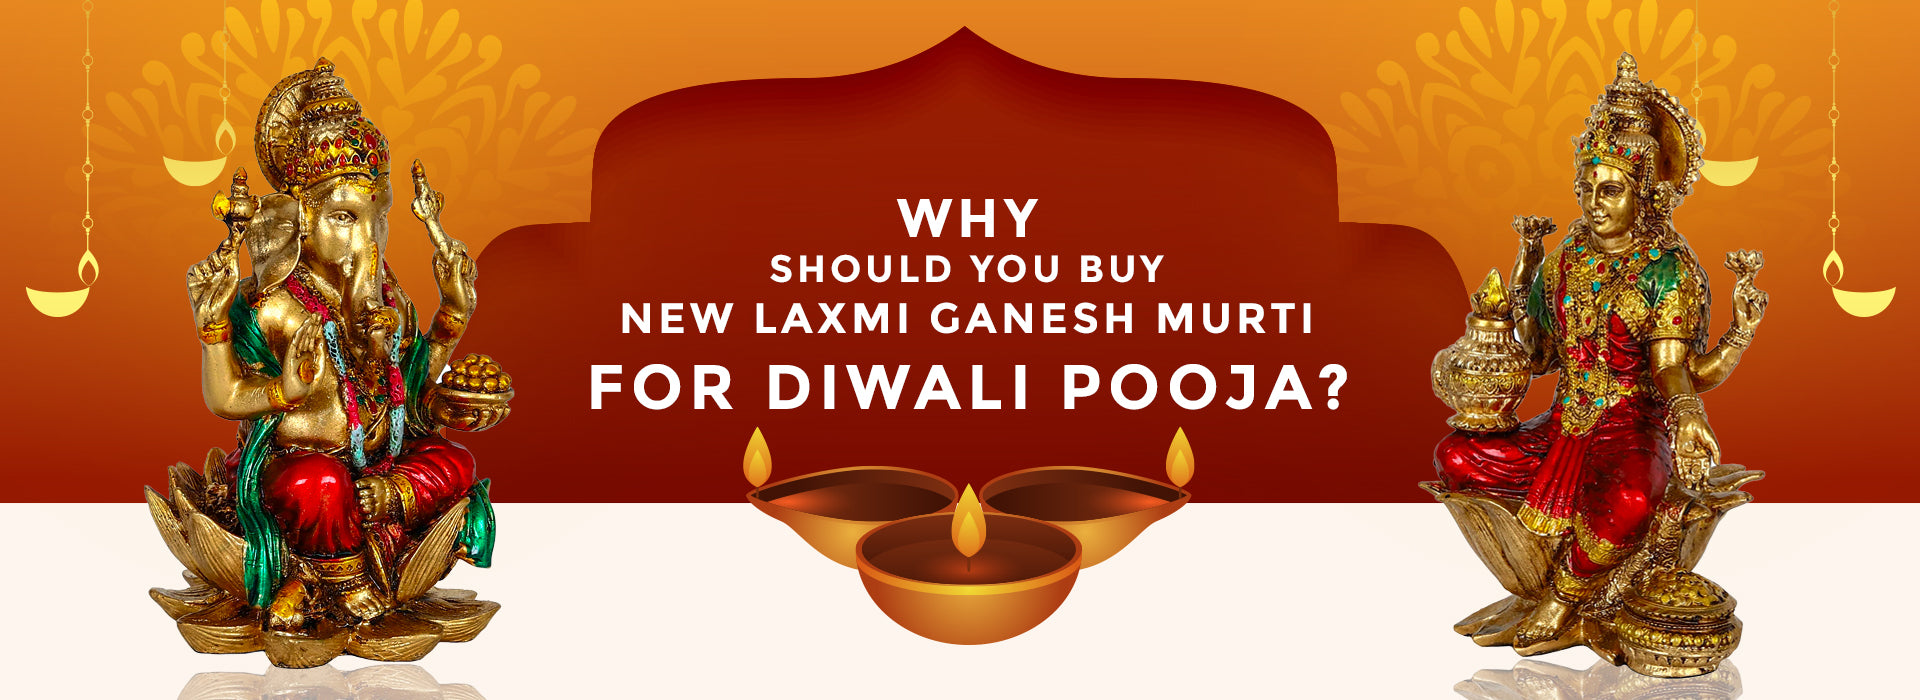 Why Should You Buy New Laxmi Ganesh Murti For Diwali Pooja?